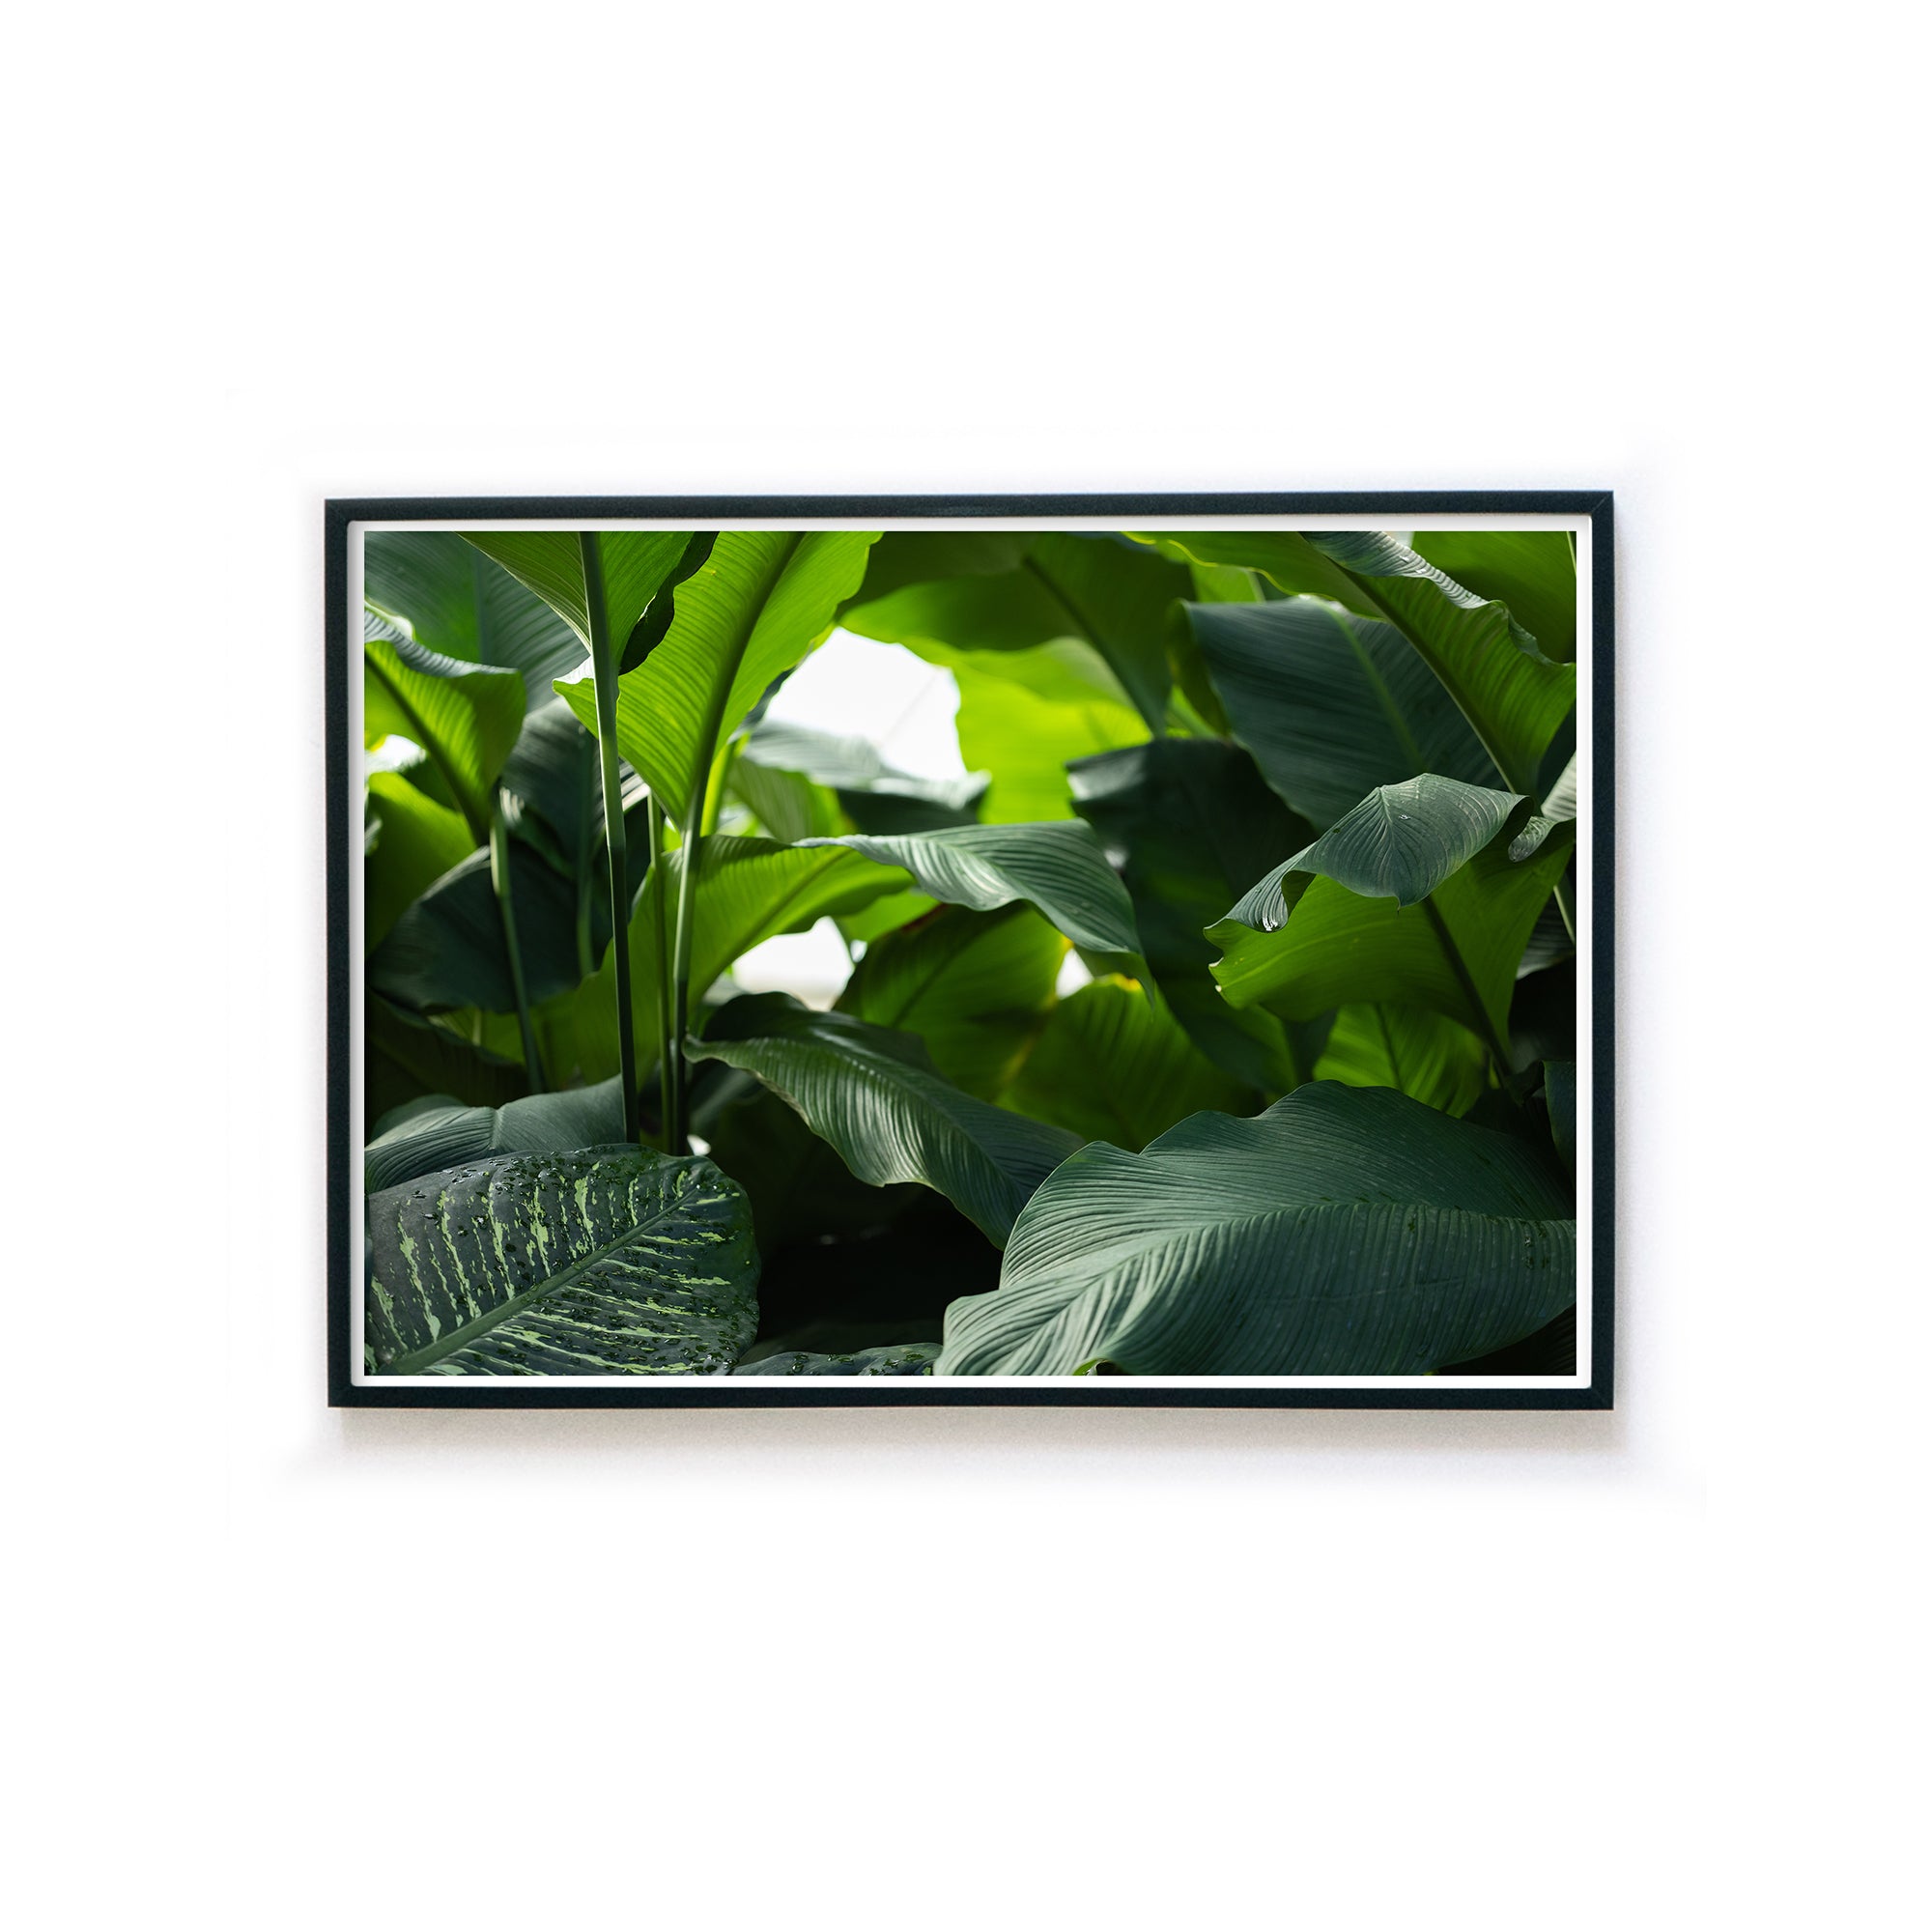 4one-pictures-natur-poster-gruen-pflanzen-wohnzimmer-bild-rahmen_f1223677-ec24-400d-a41c-67baedaec9e7.jpg